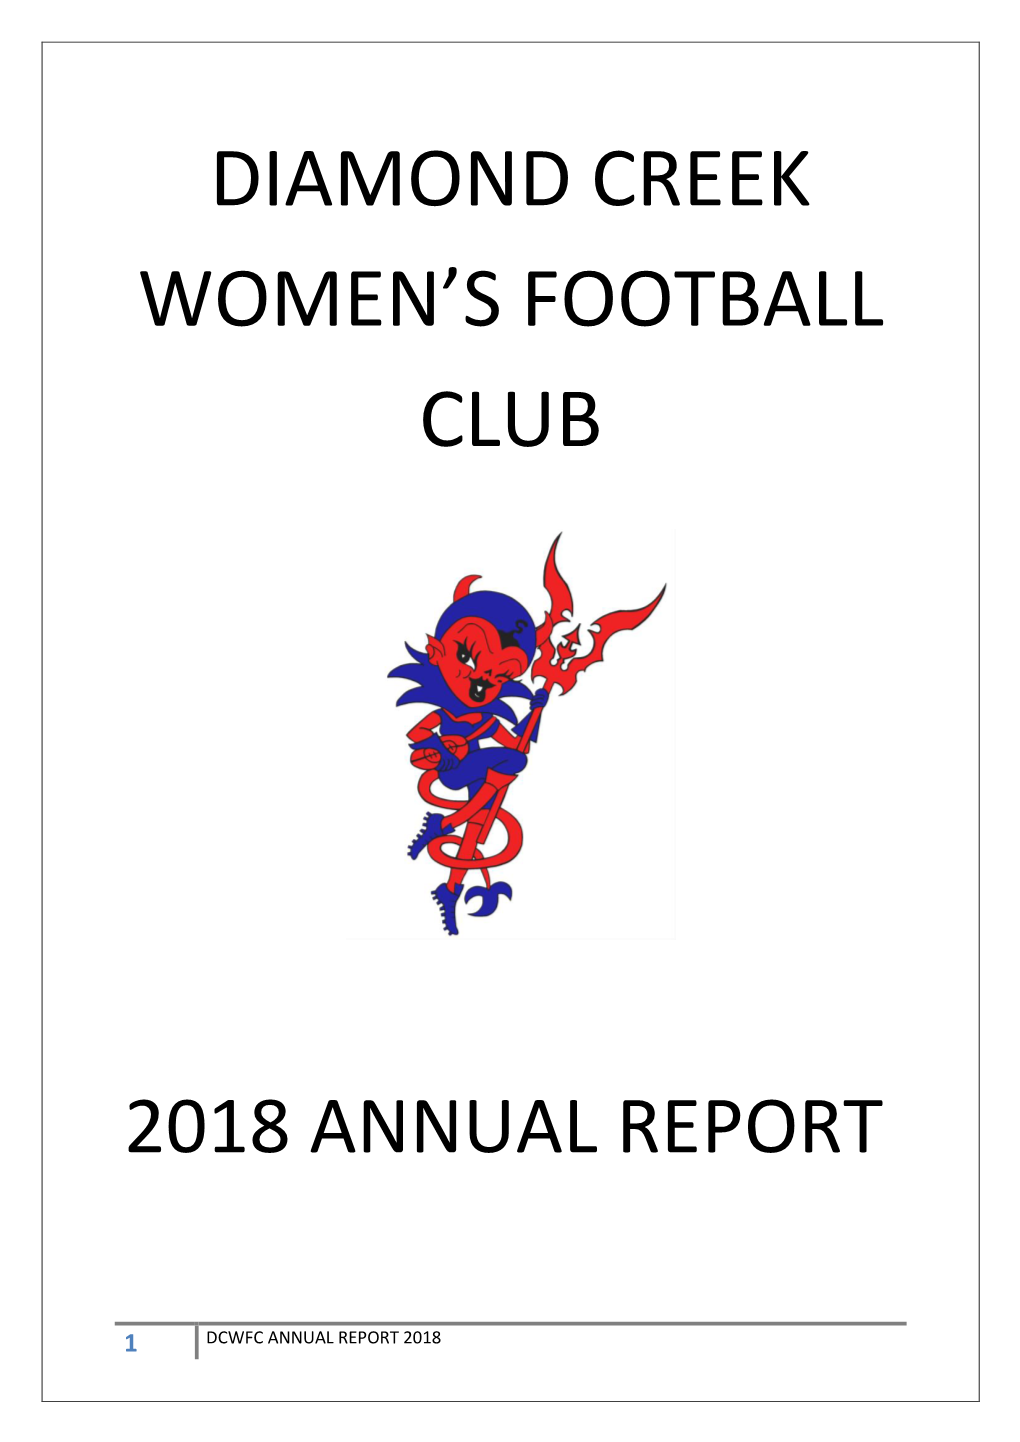 Diamond Creek Women's Football Club